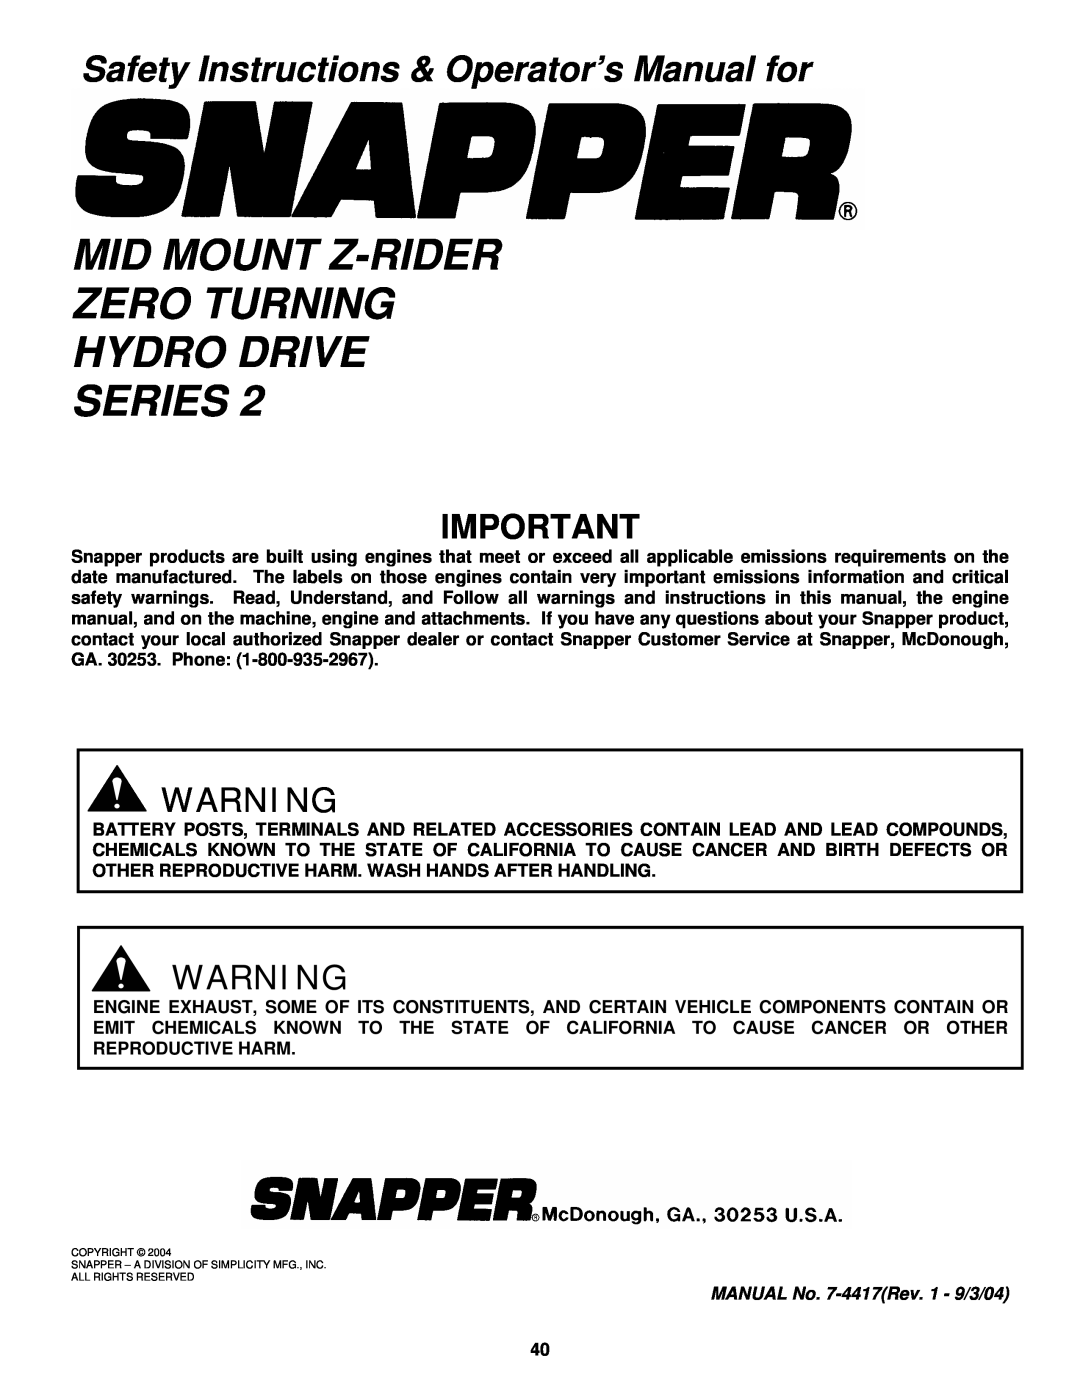 Snapper NZMJ23522KH, NZMJ25612KH Mid Mount Z-Rider Zero Turning Hydro Drive Series, MANUAL No. 7-4417Rev. 1 - 9/3/04 